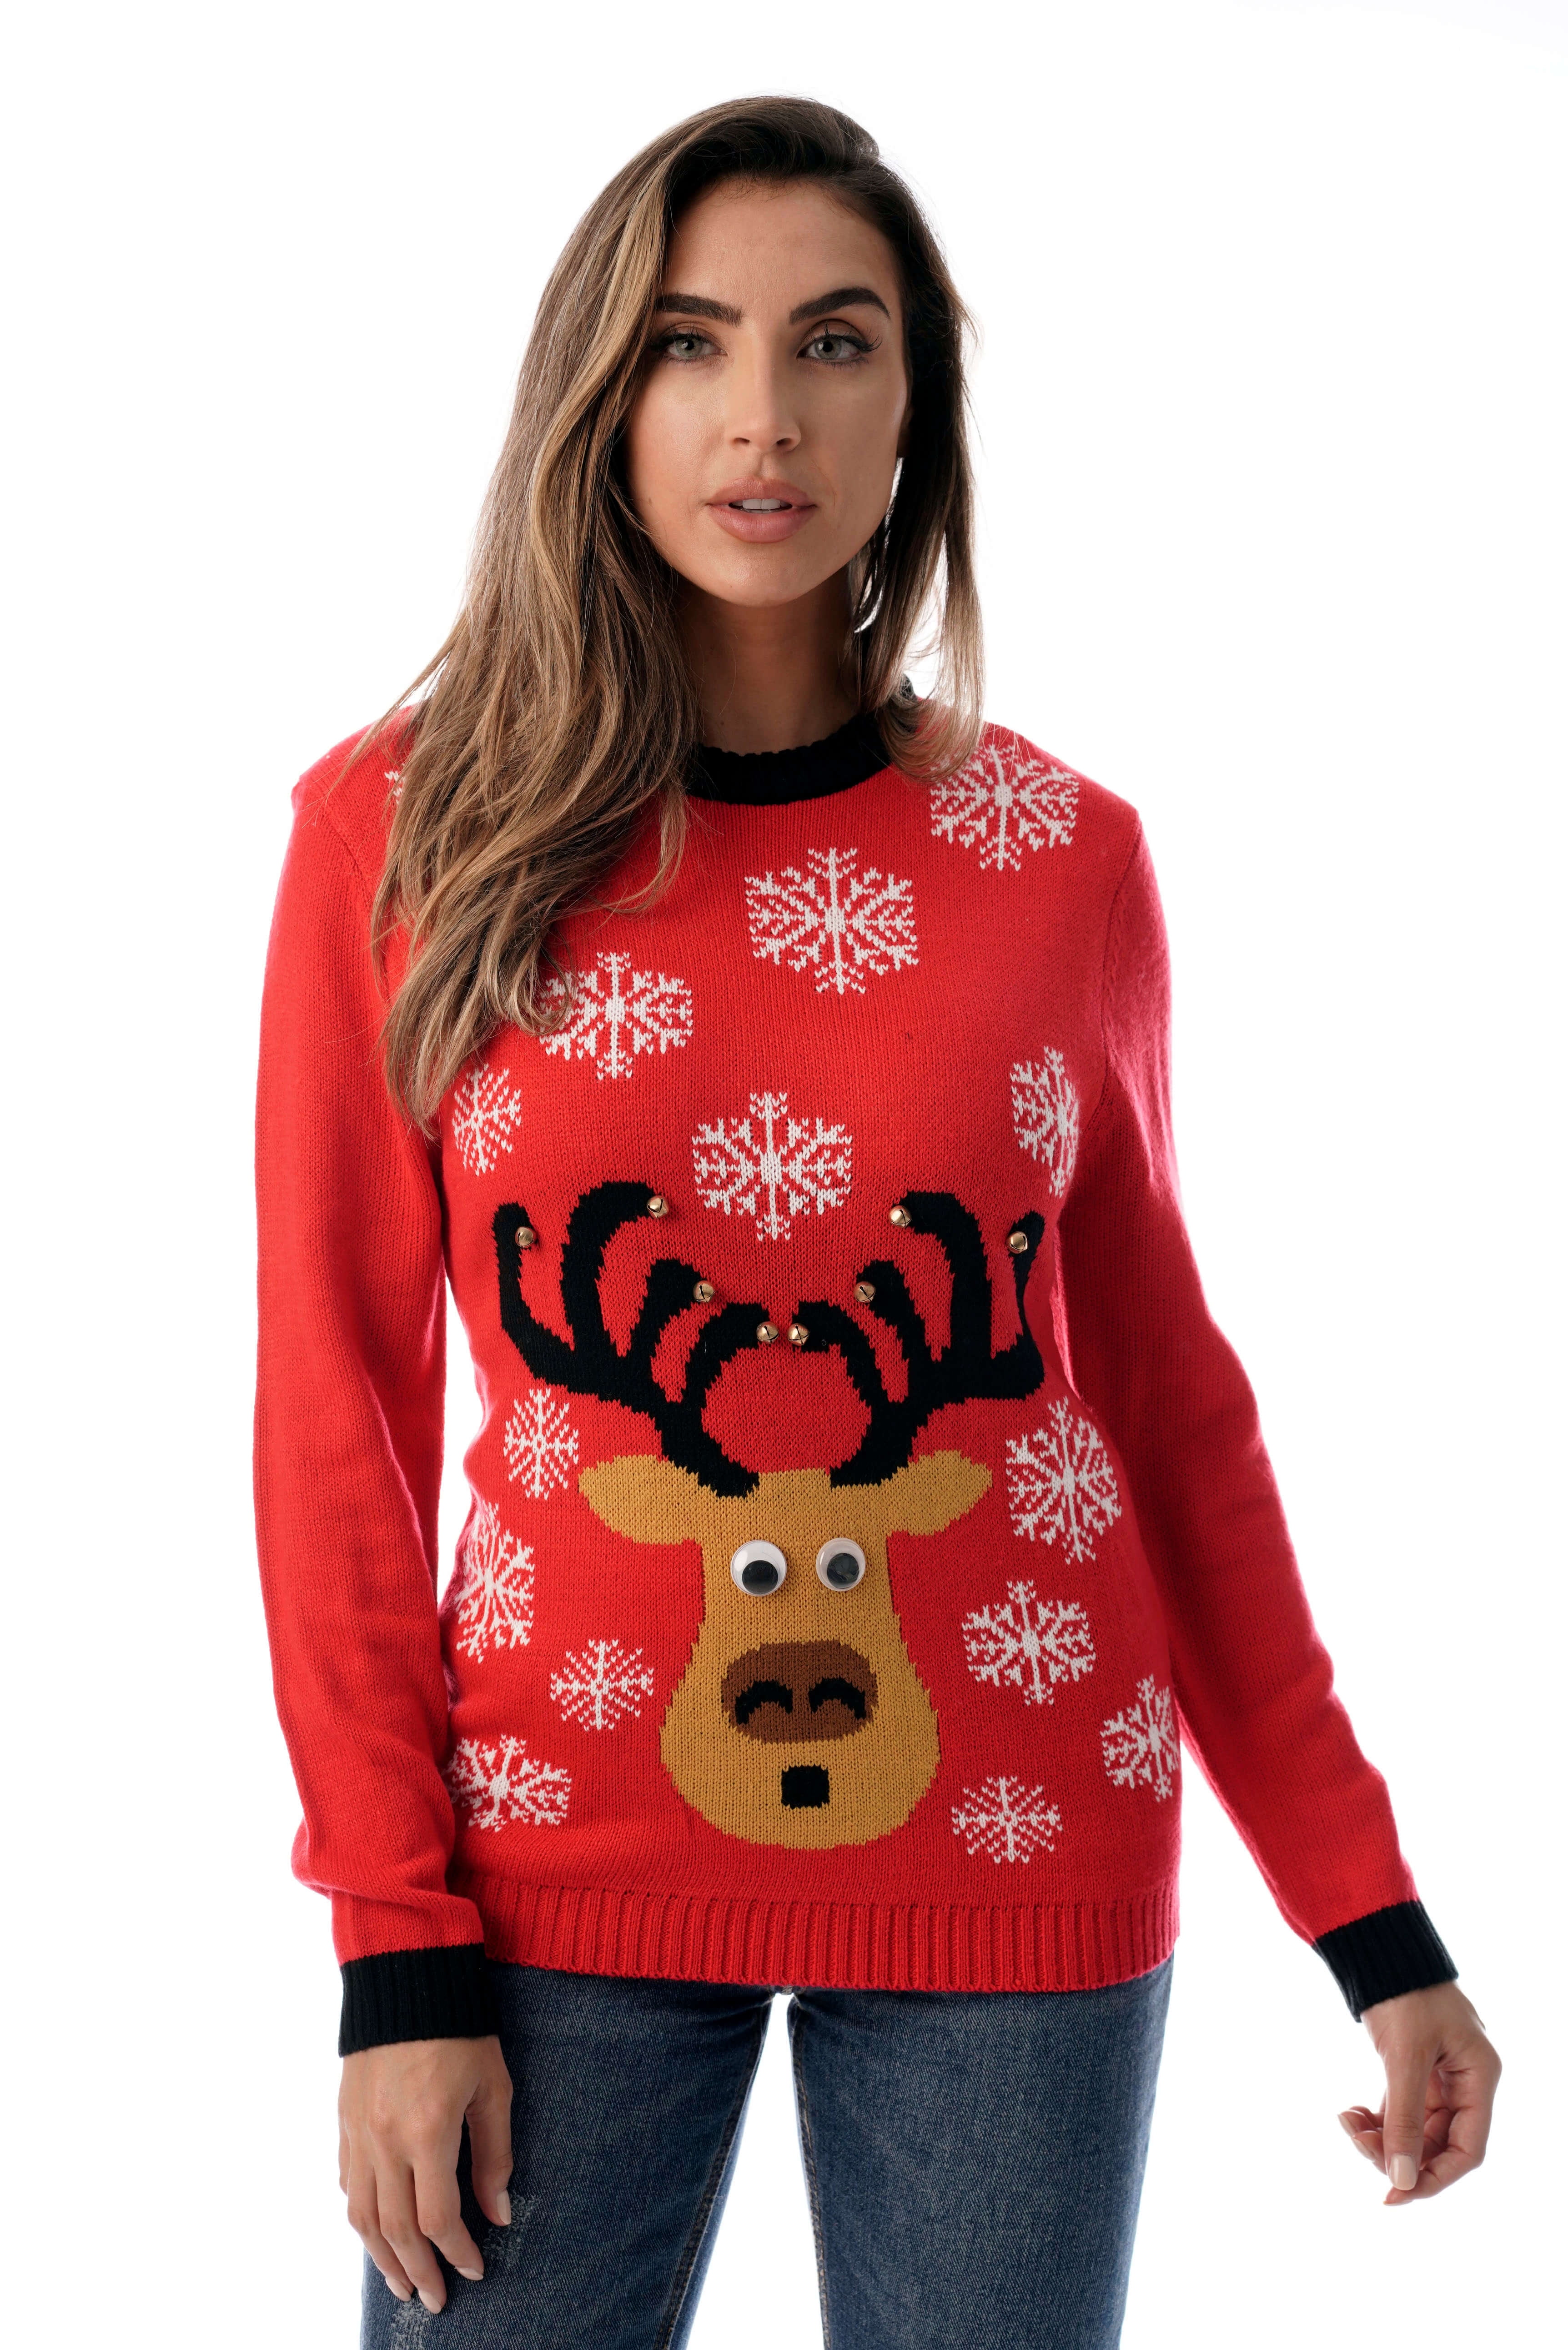 Doggie Style Store Black Reindeer Rudolph Cat Pet Kitten Knitted Jumper Knitwear Christmas Xmas Sweater Size XL